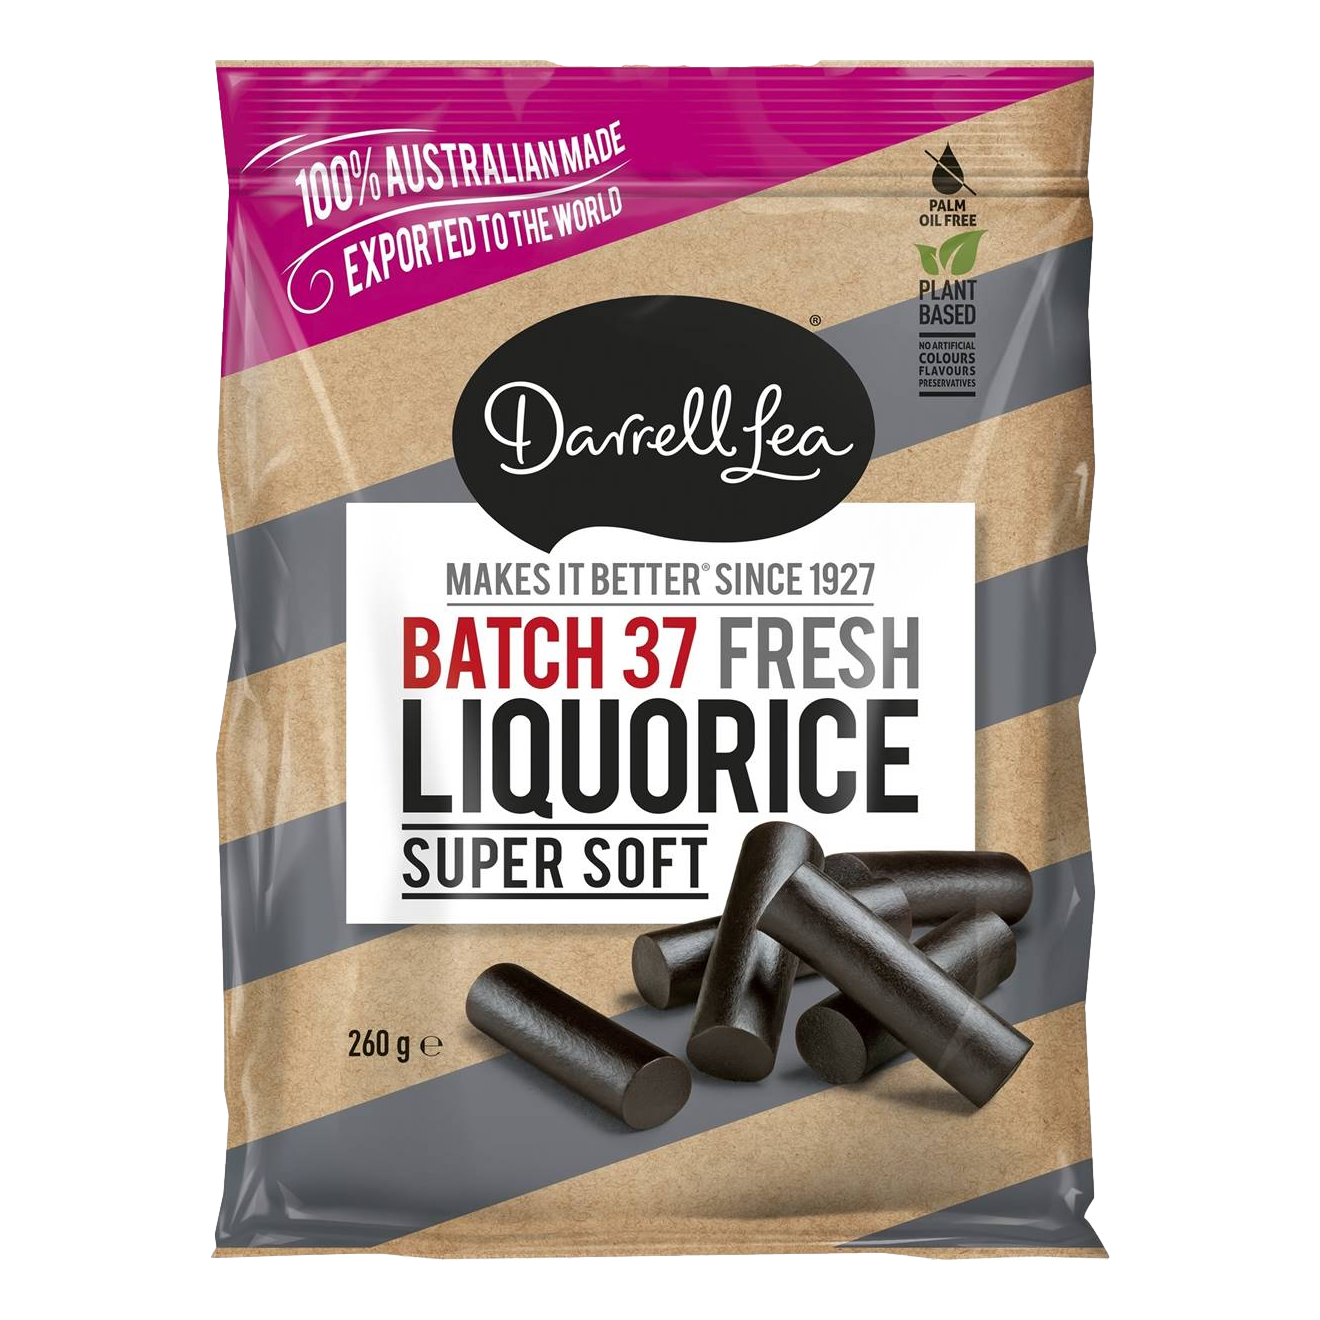 Darrell Lea Batch 37 Fresh Super Soft Liquorice 260g